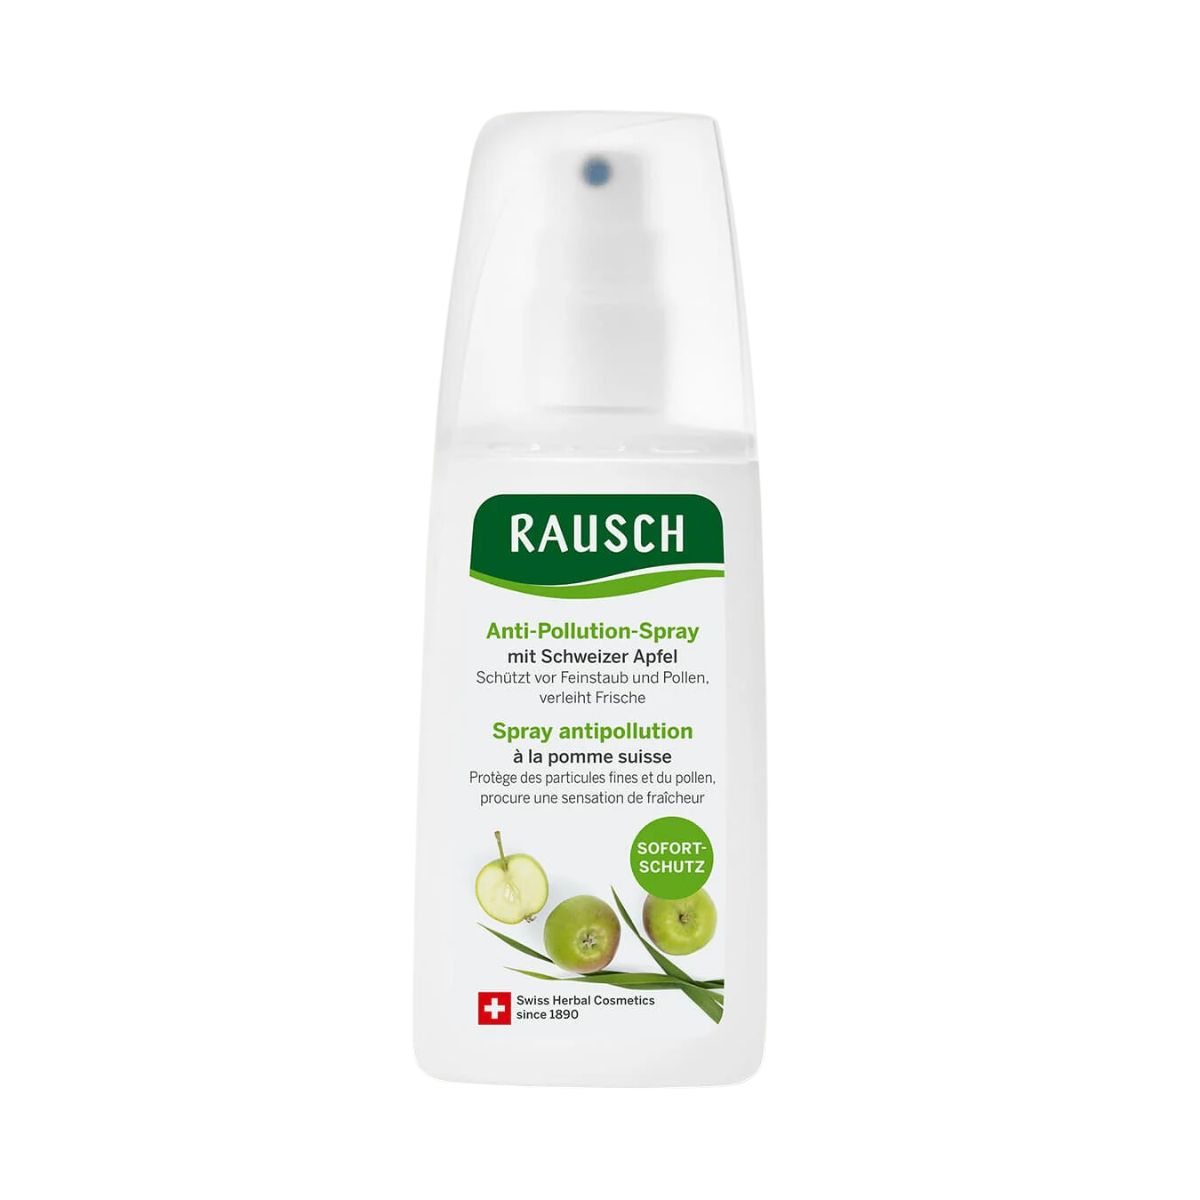 Rausch Anti-Pollution-Spray Schweizer Apfel 100 ml